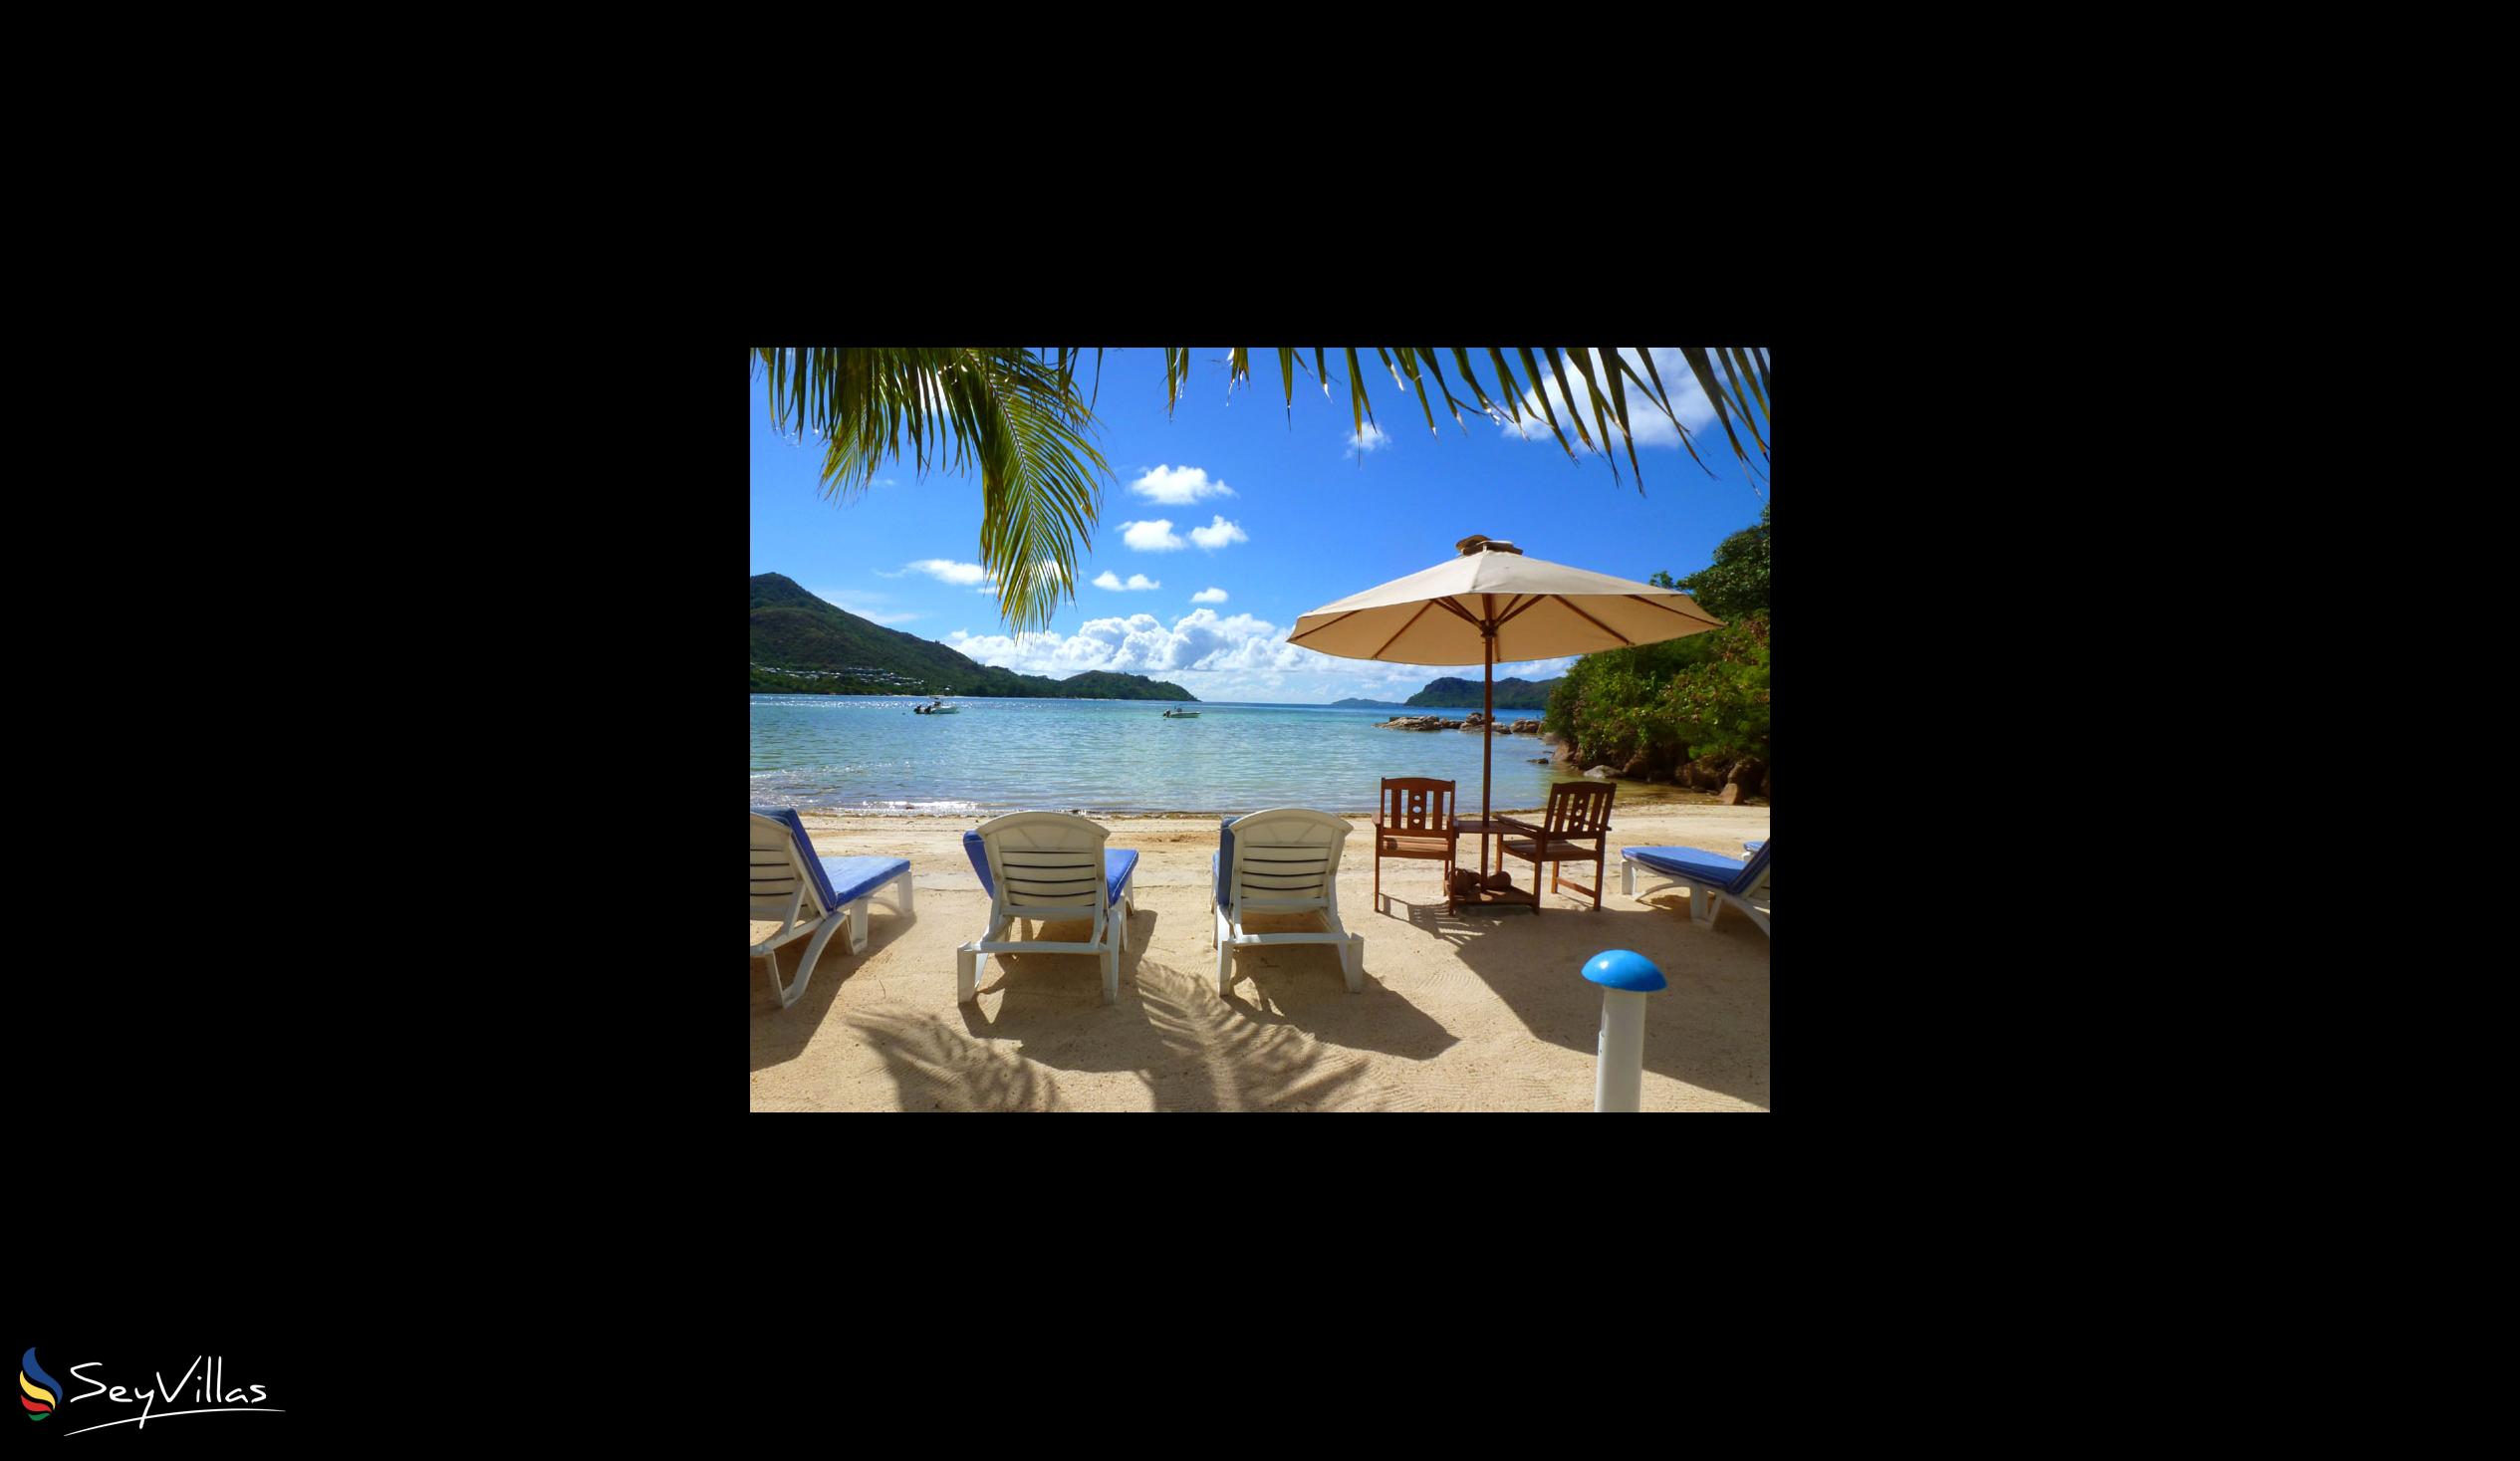 Photo 9: Sea View Lodge - Outdoor area - Praslin (Seychelles)